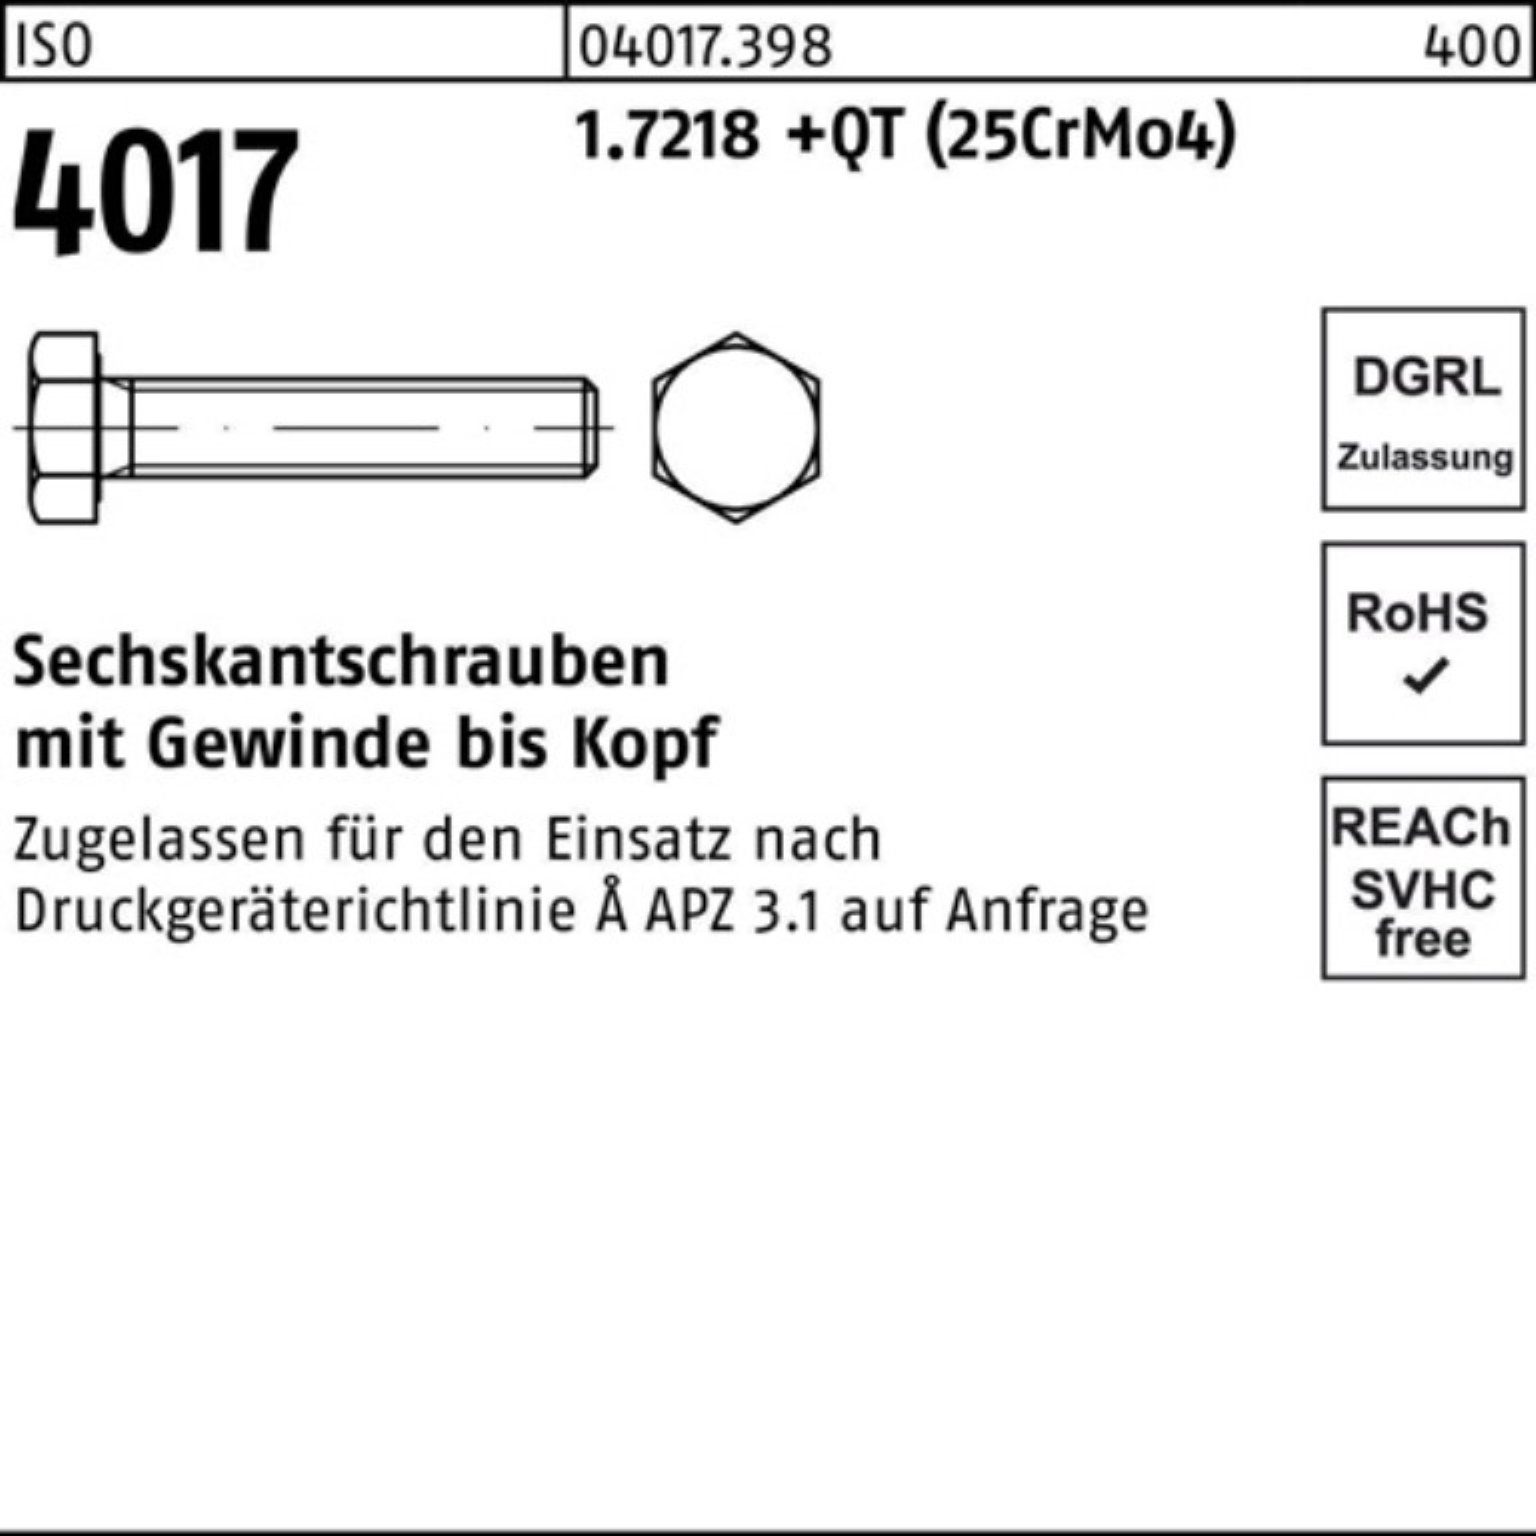 1.7218 150 ISO M20x (25CrMo4) Sechskantschraube +QT VG Sechskantschraube 4017 Pack 100er Bufab